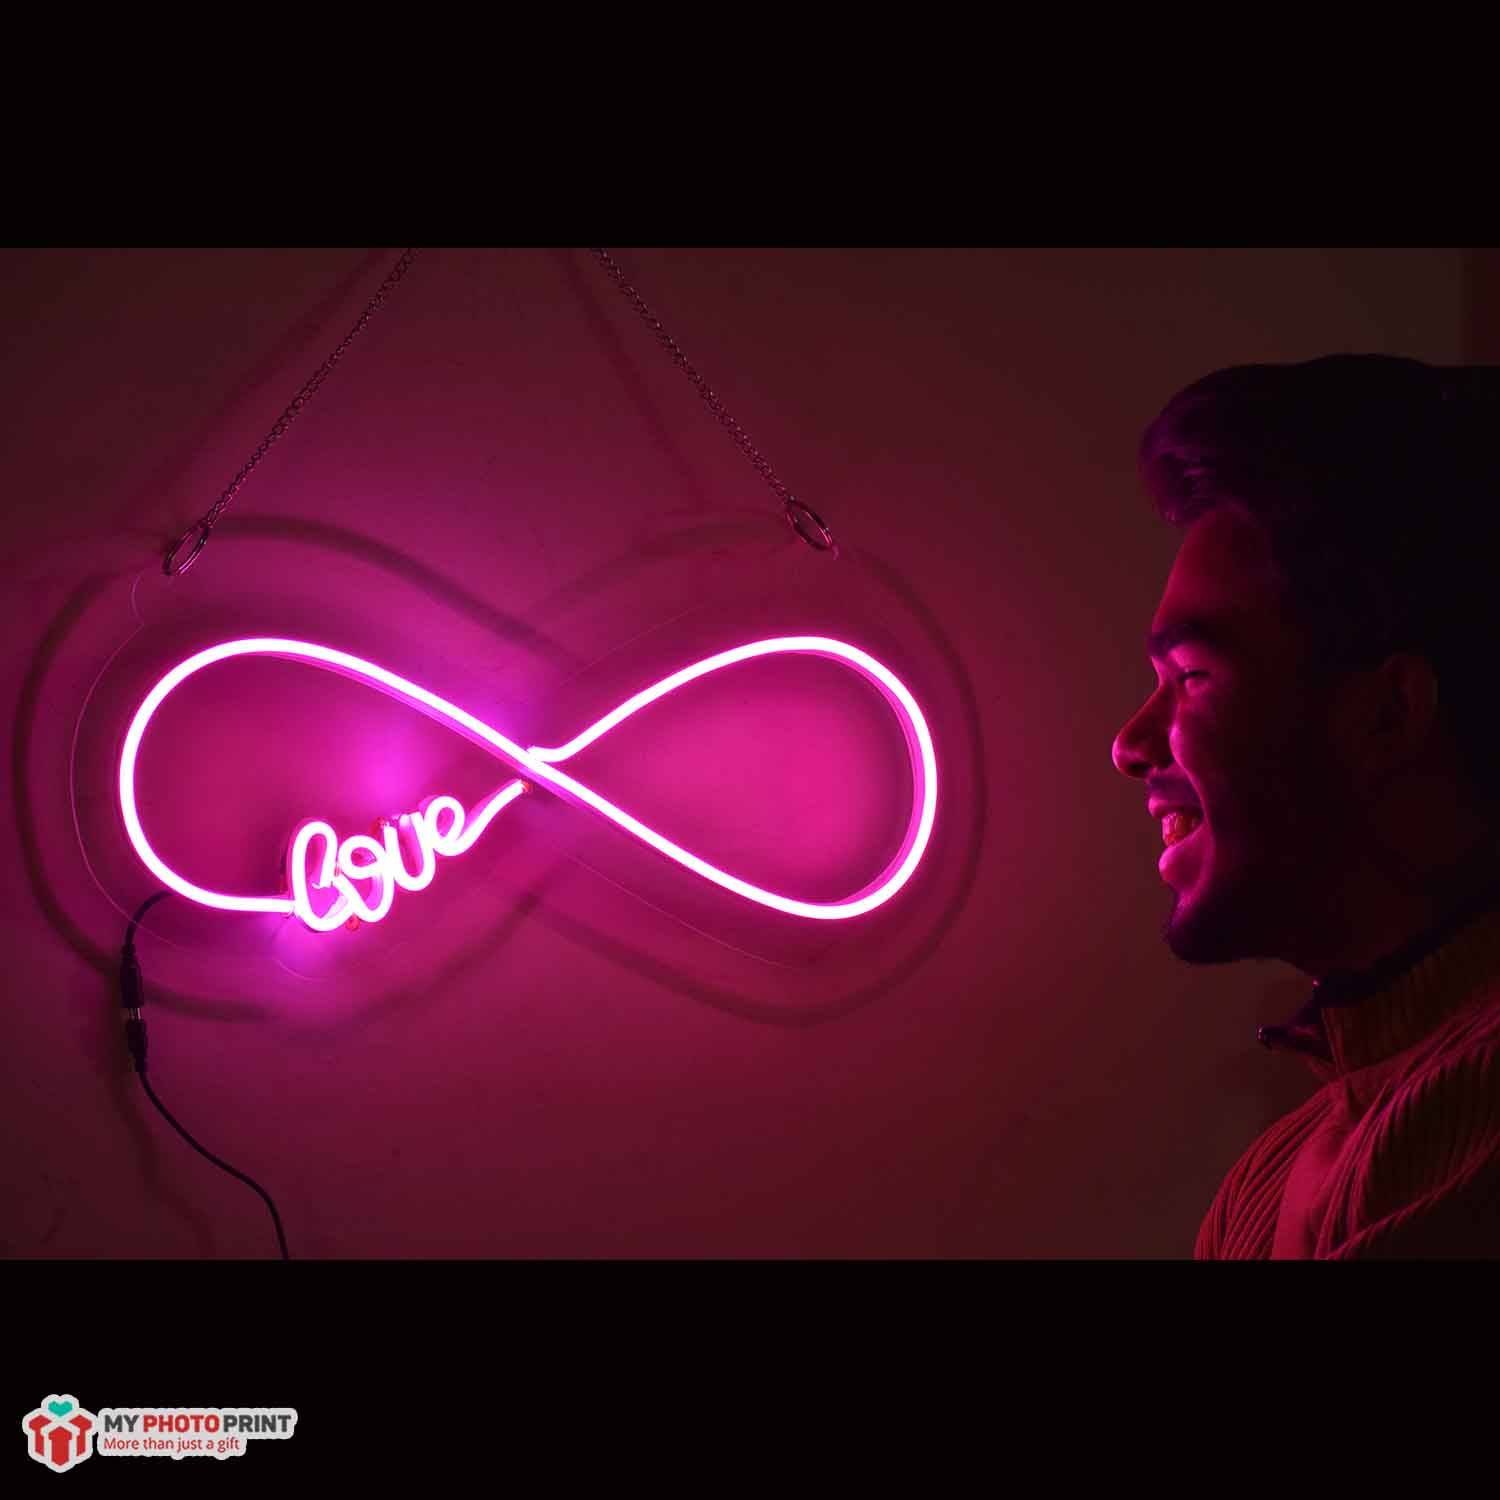 Neon Infinity Love Led Neon Sign Decorative Lights Wall Decor